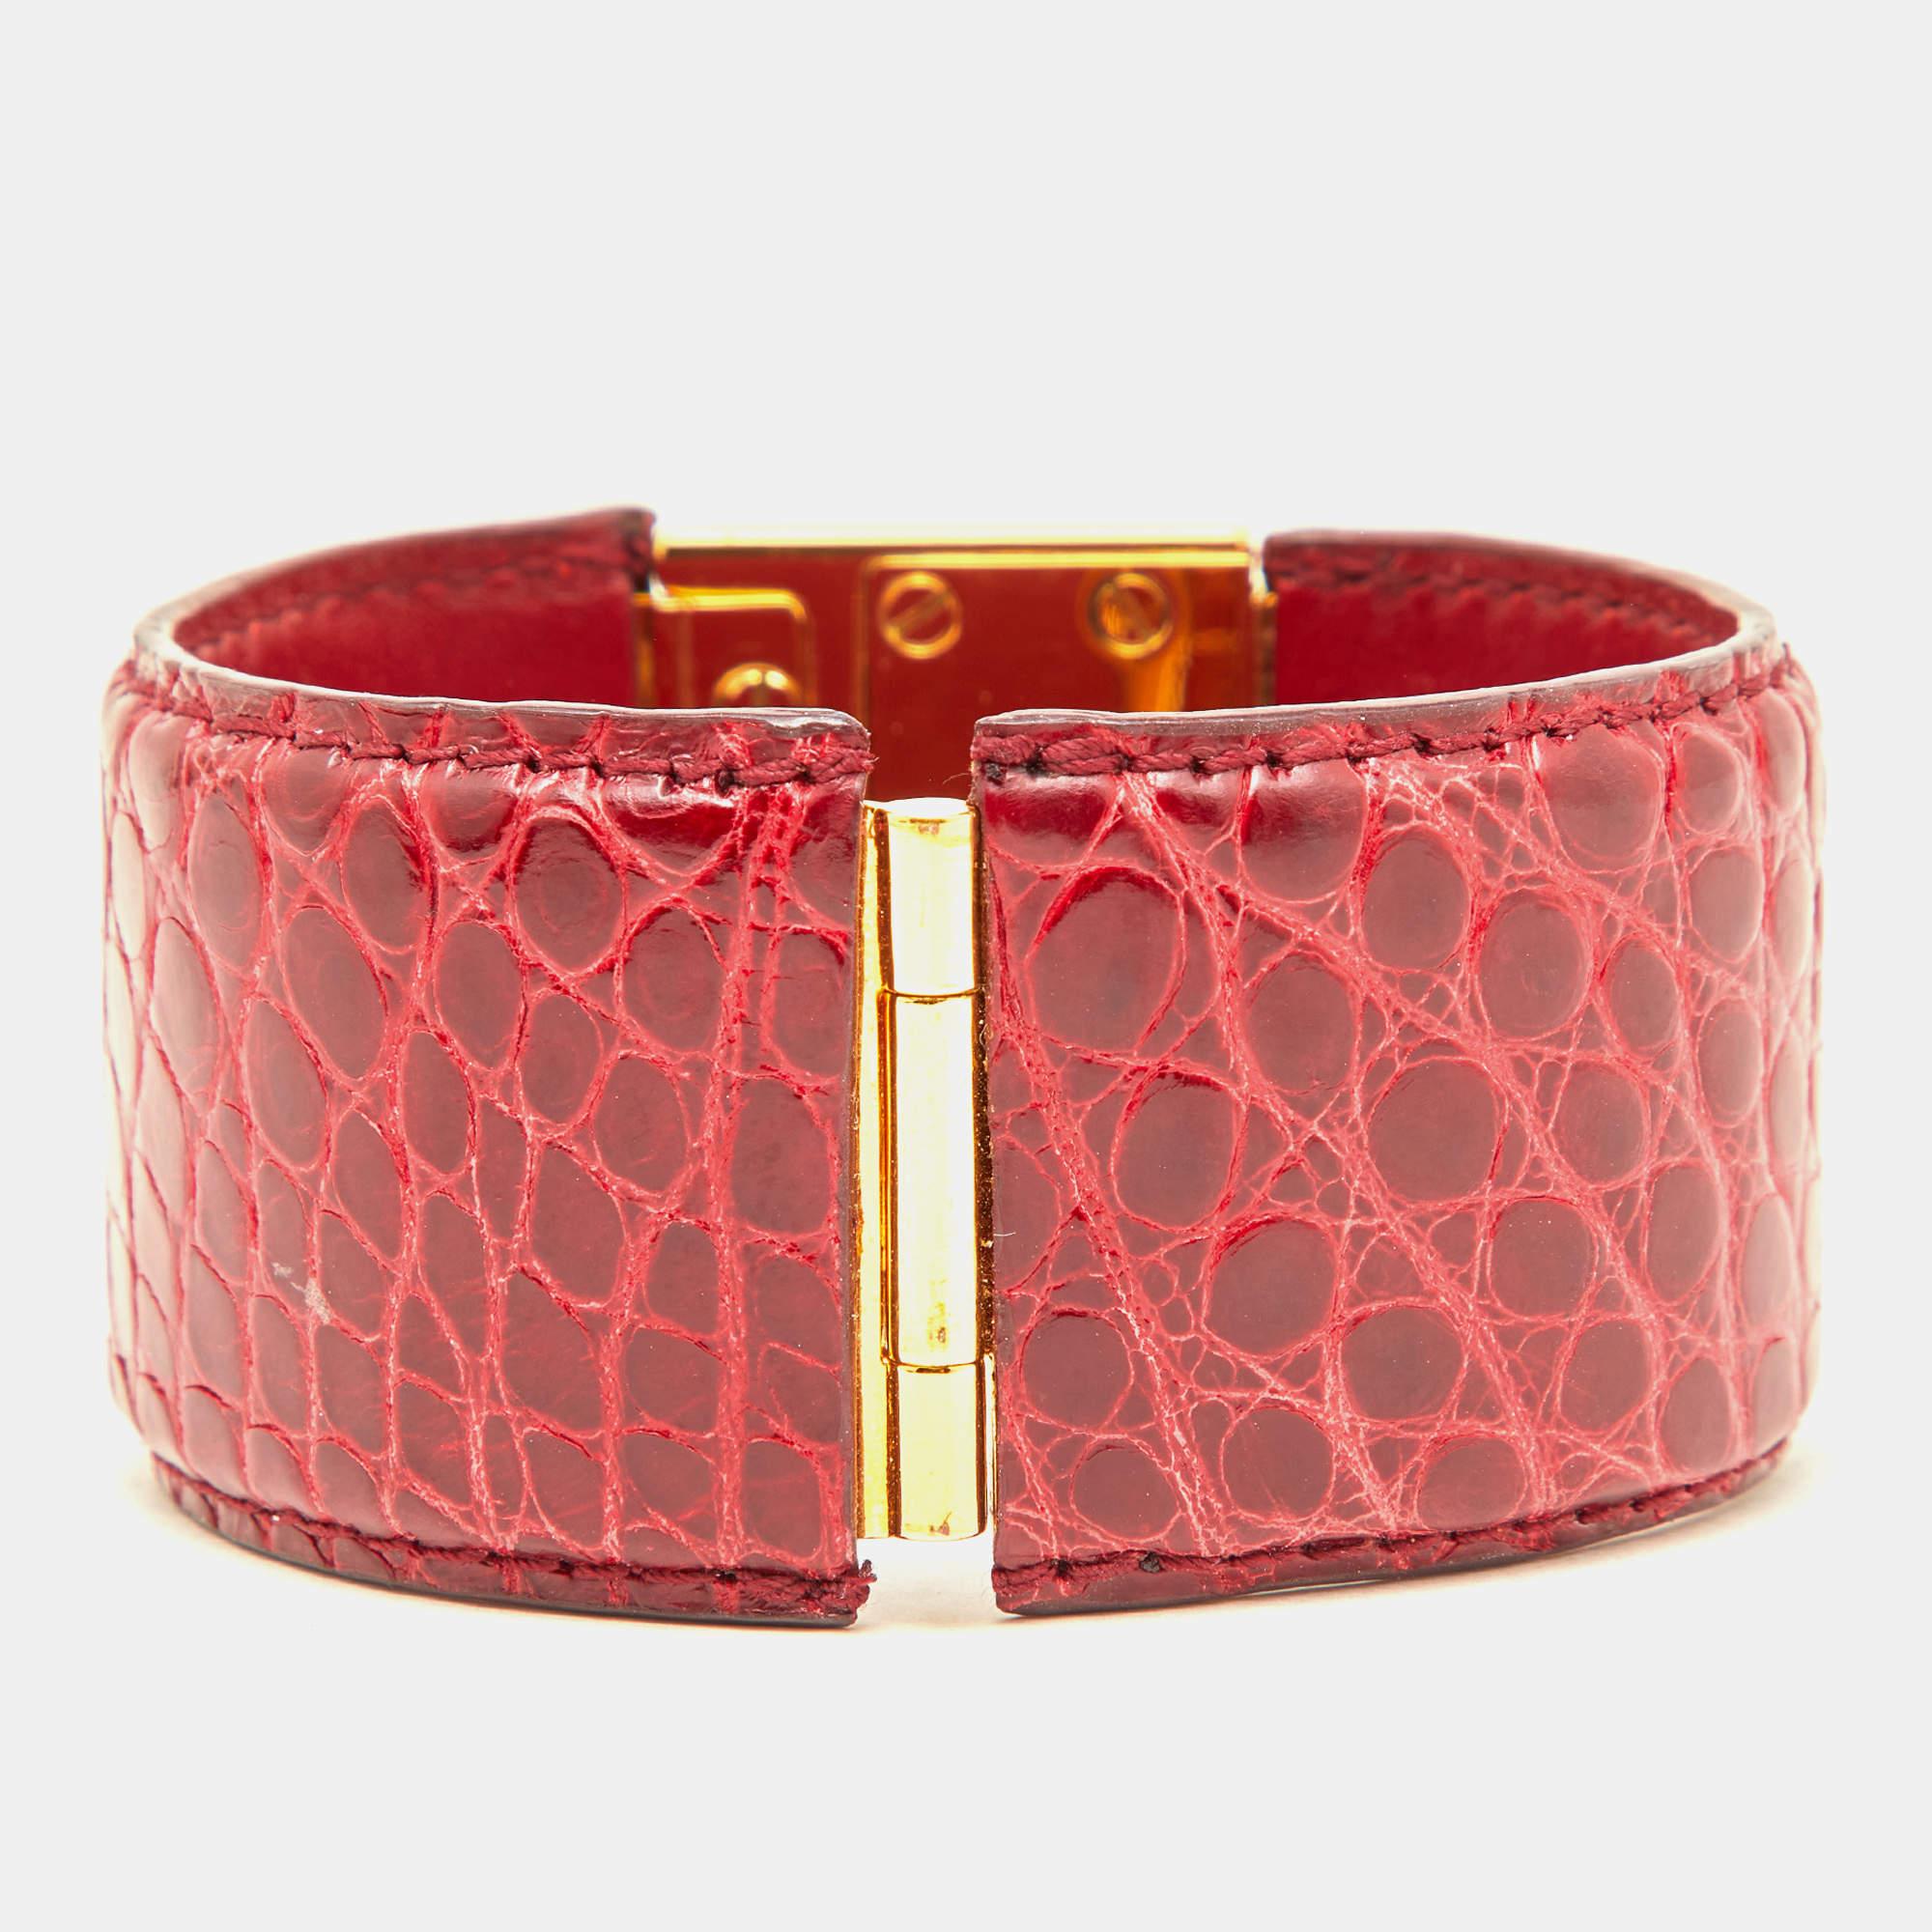 Prada Red Alligator Leather Gold Tone Wide Cuff Bracelet In Fair Condition For Sale In Dubai, Al Qouz 2